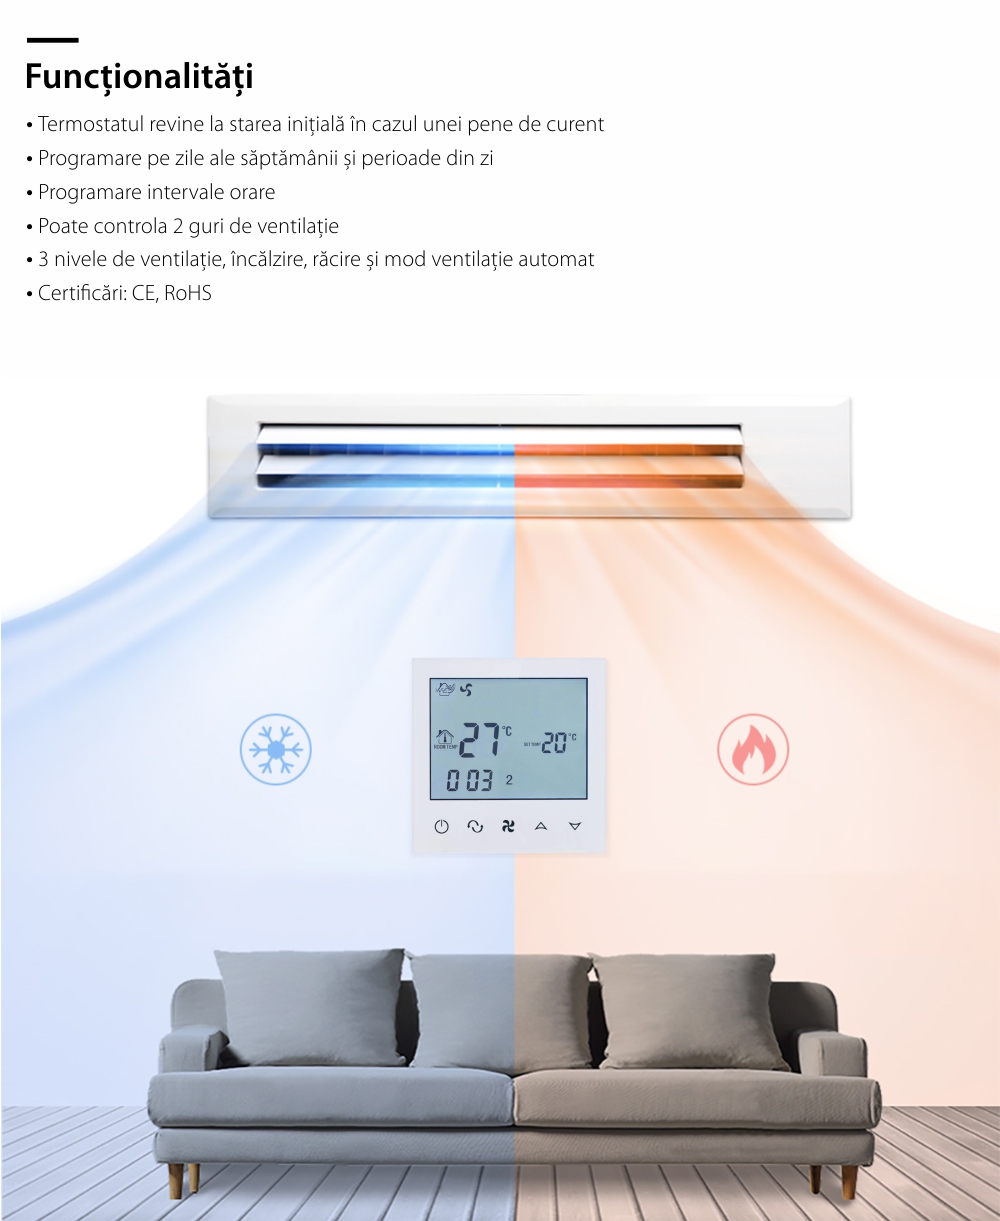 Termostat cu fir pentru aer conditionat BeOk TDS21-AC2, Compatibil cu sisteme HVAC